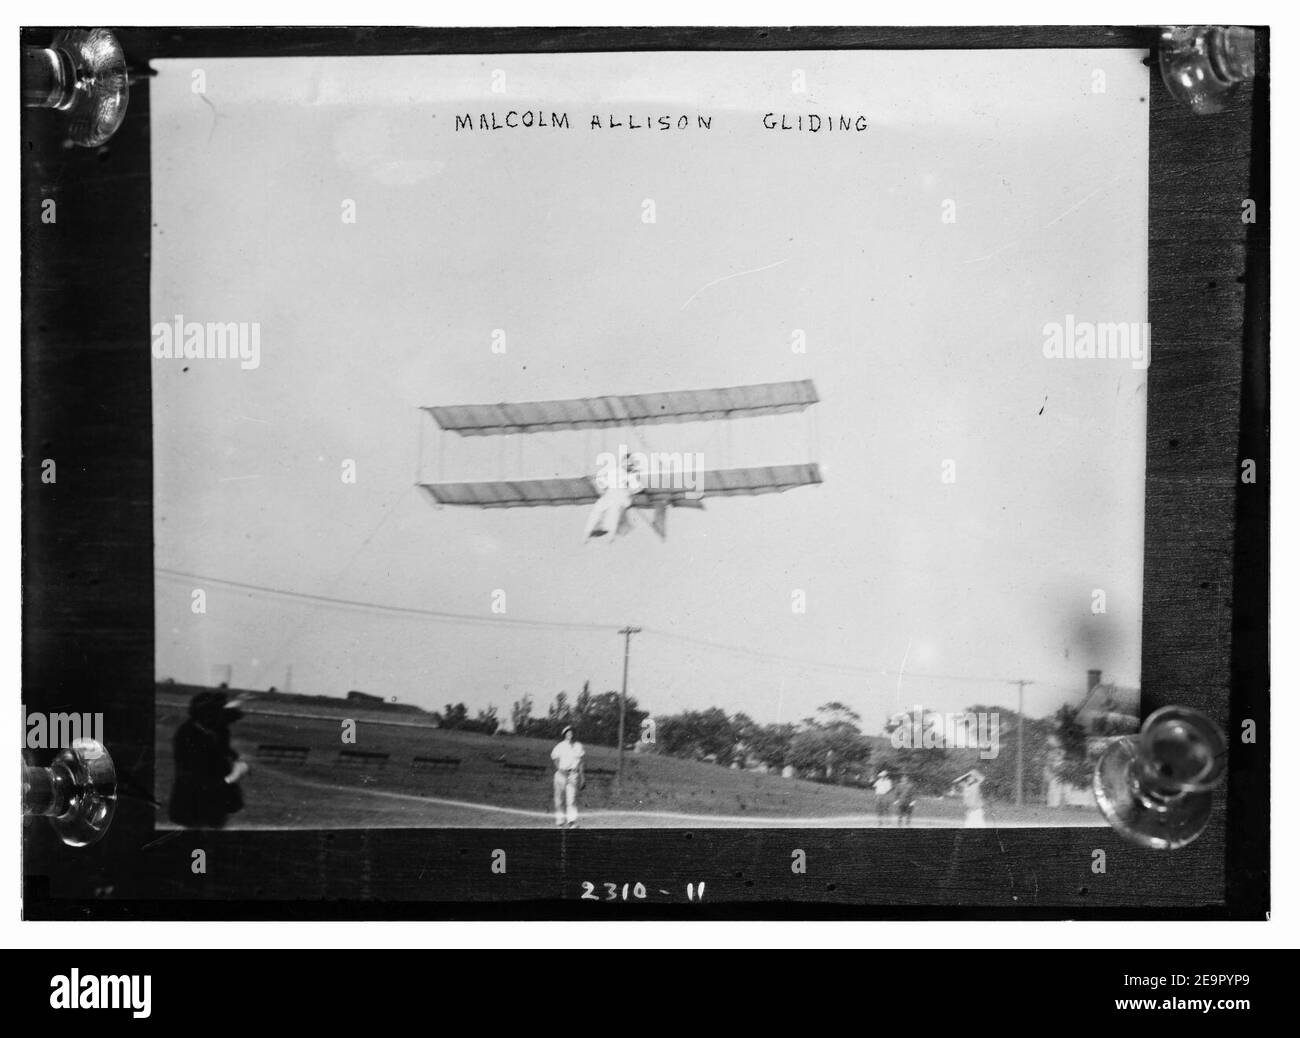 Malcolm Allison - Gliding Stock Photo